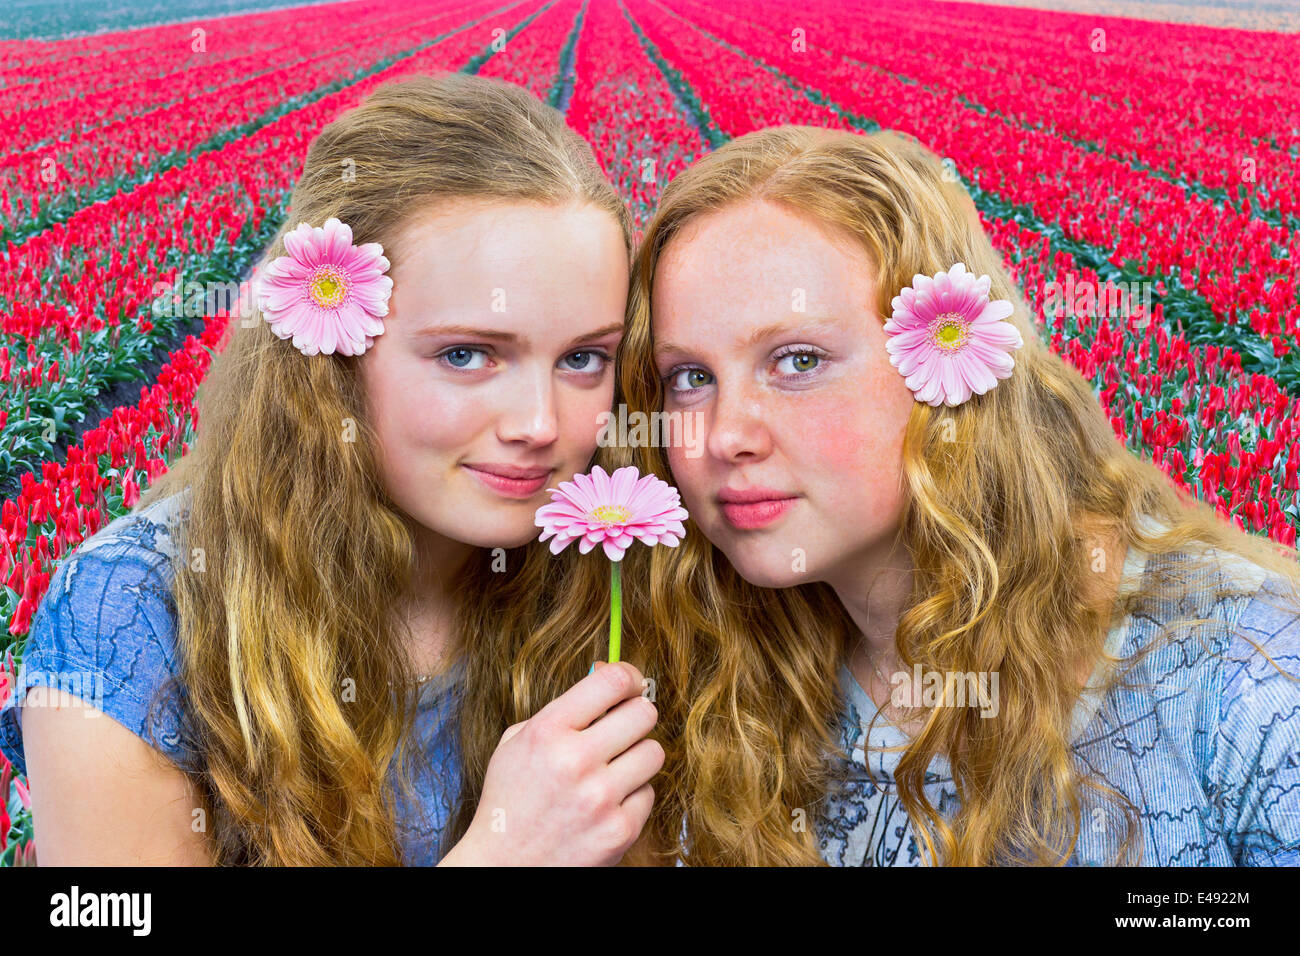 Zwei Mädchen im Teenageralter vor roten Tulpen Feld Stockfoto